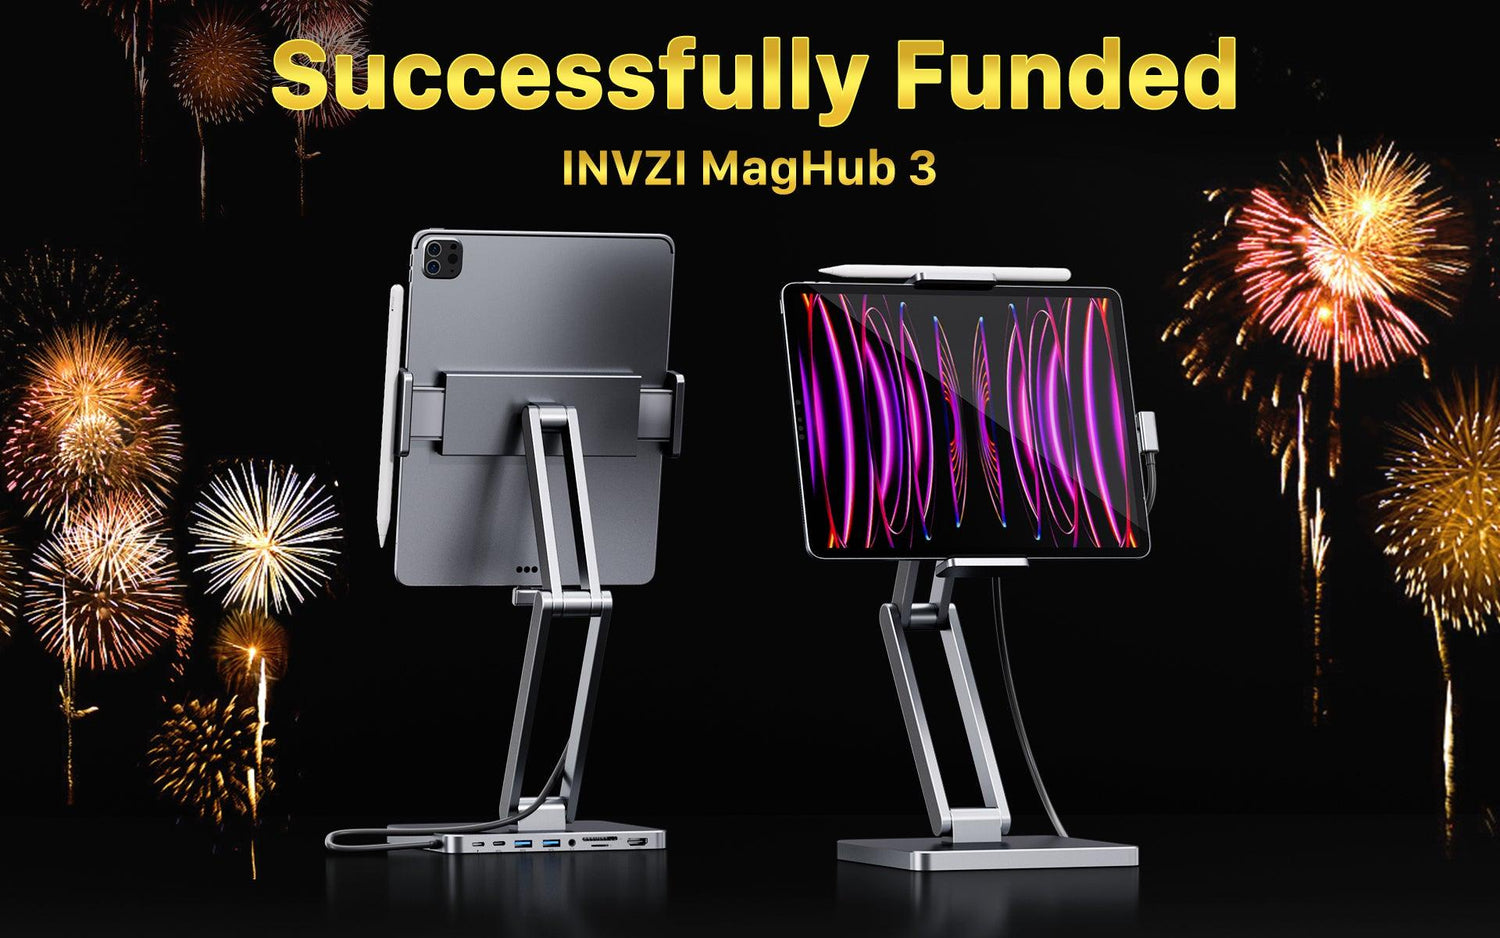 INVZI MagHub 3 Funded on Kickstarter - INVZI